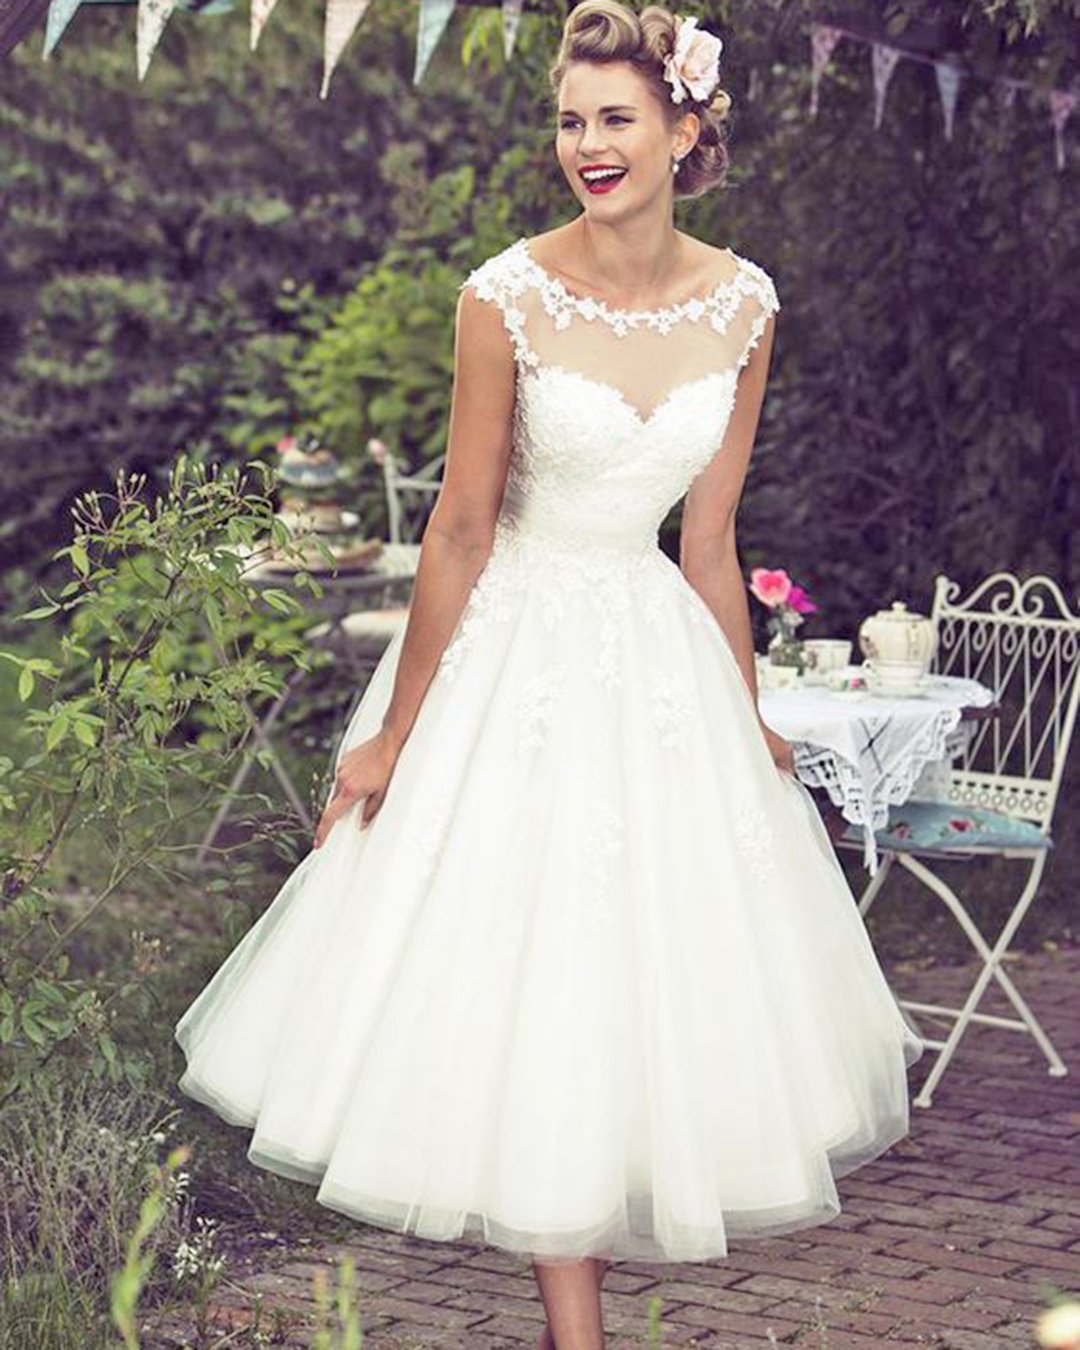 Sophie Womens V Neck Long Sleeves Lace Appliques Tea Length Wedding Dresses Short 2019 for Bride S059